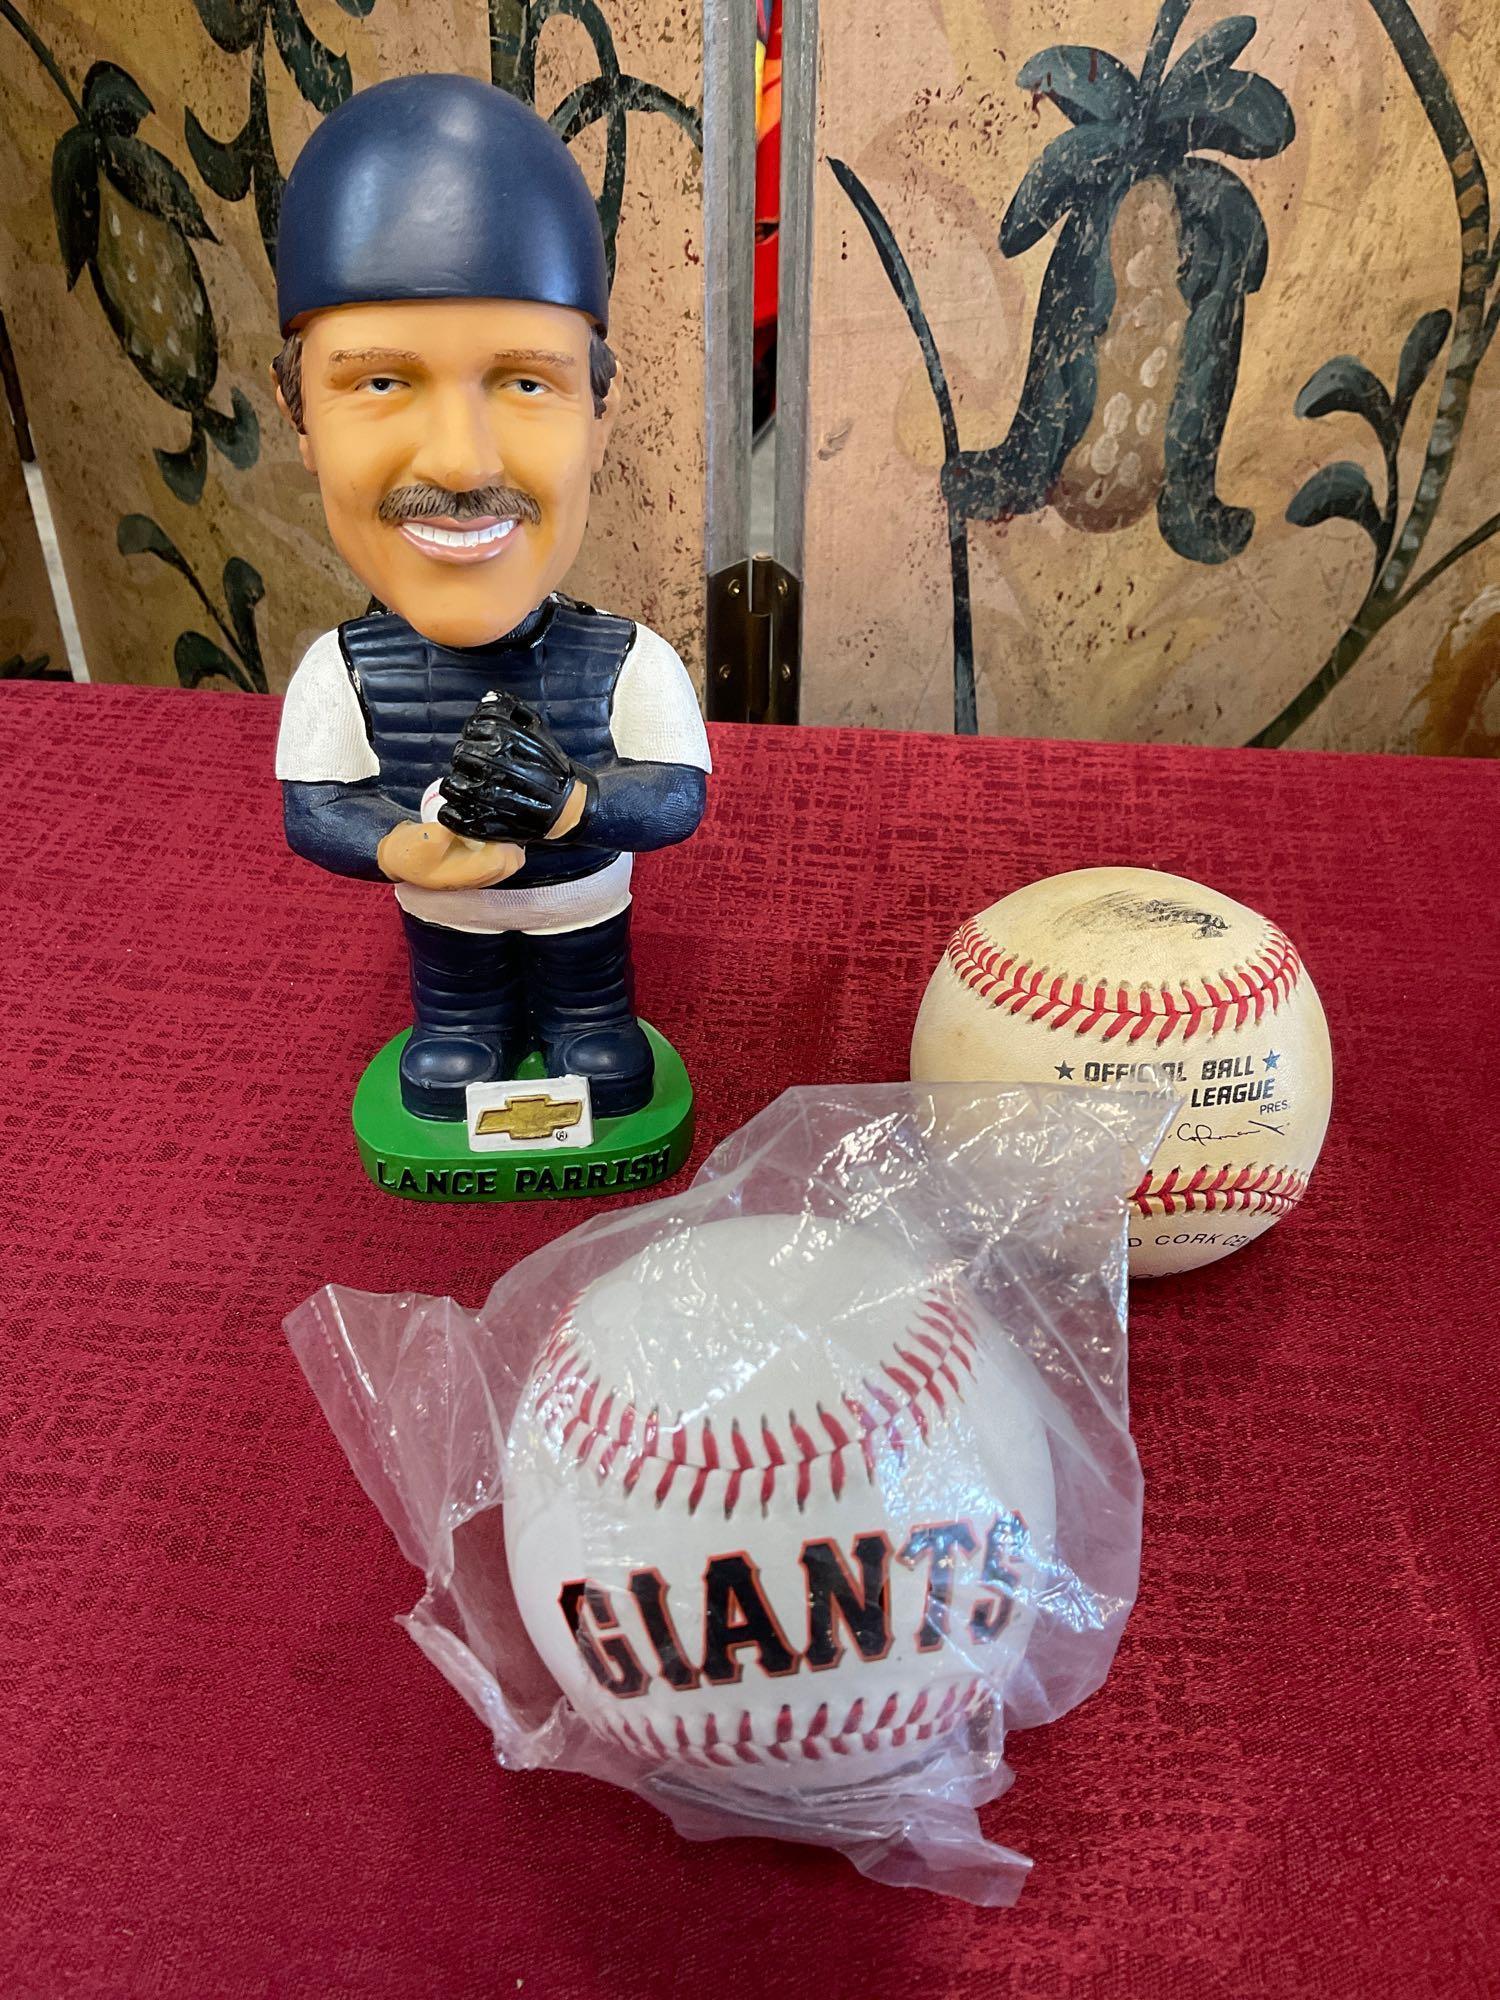 7" tall, Lance Parrish Bobble head figure, Giants Commemorative baseball, & Official National League